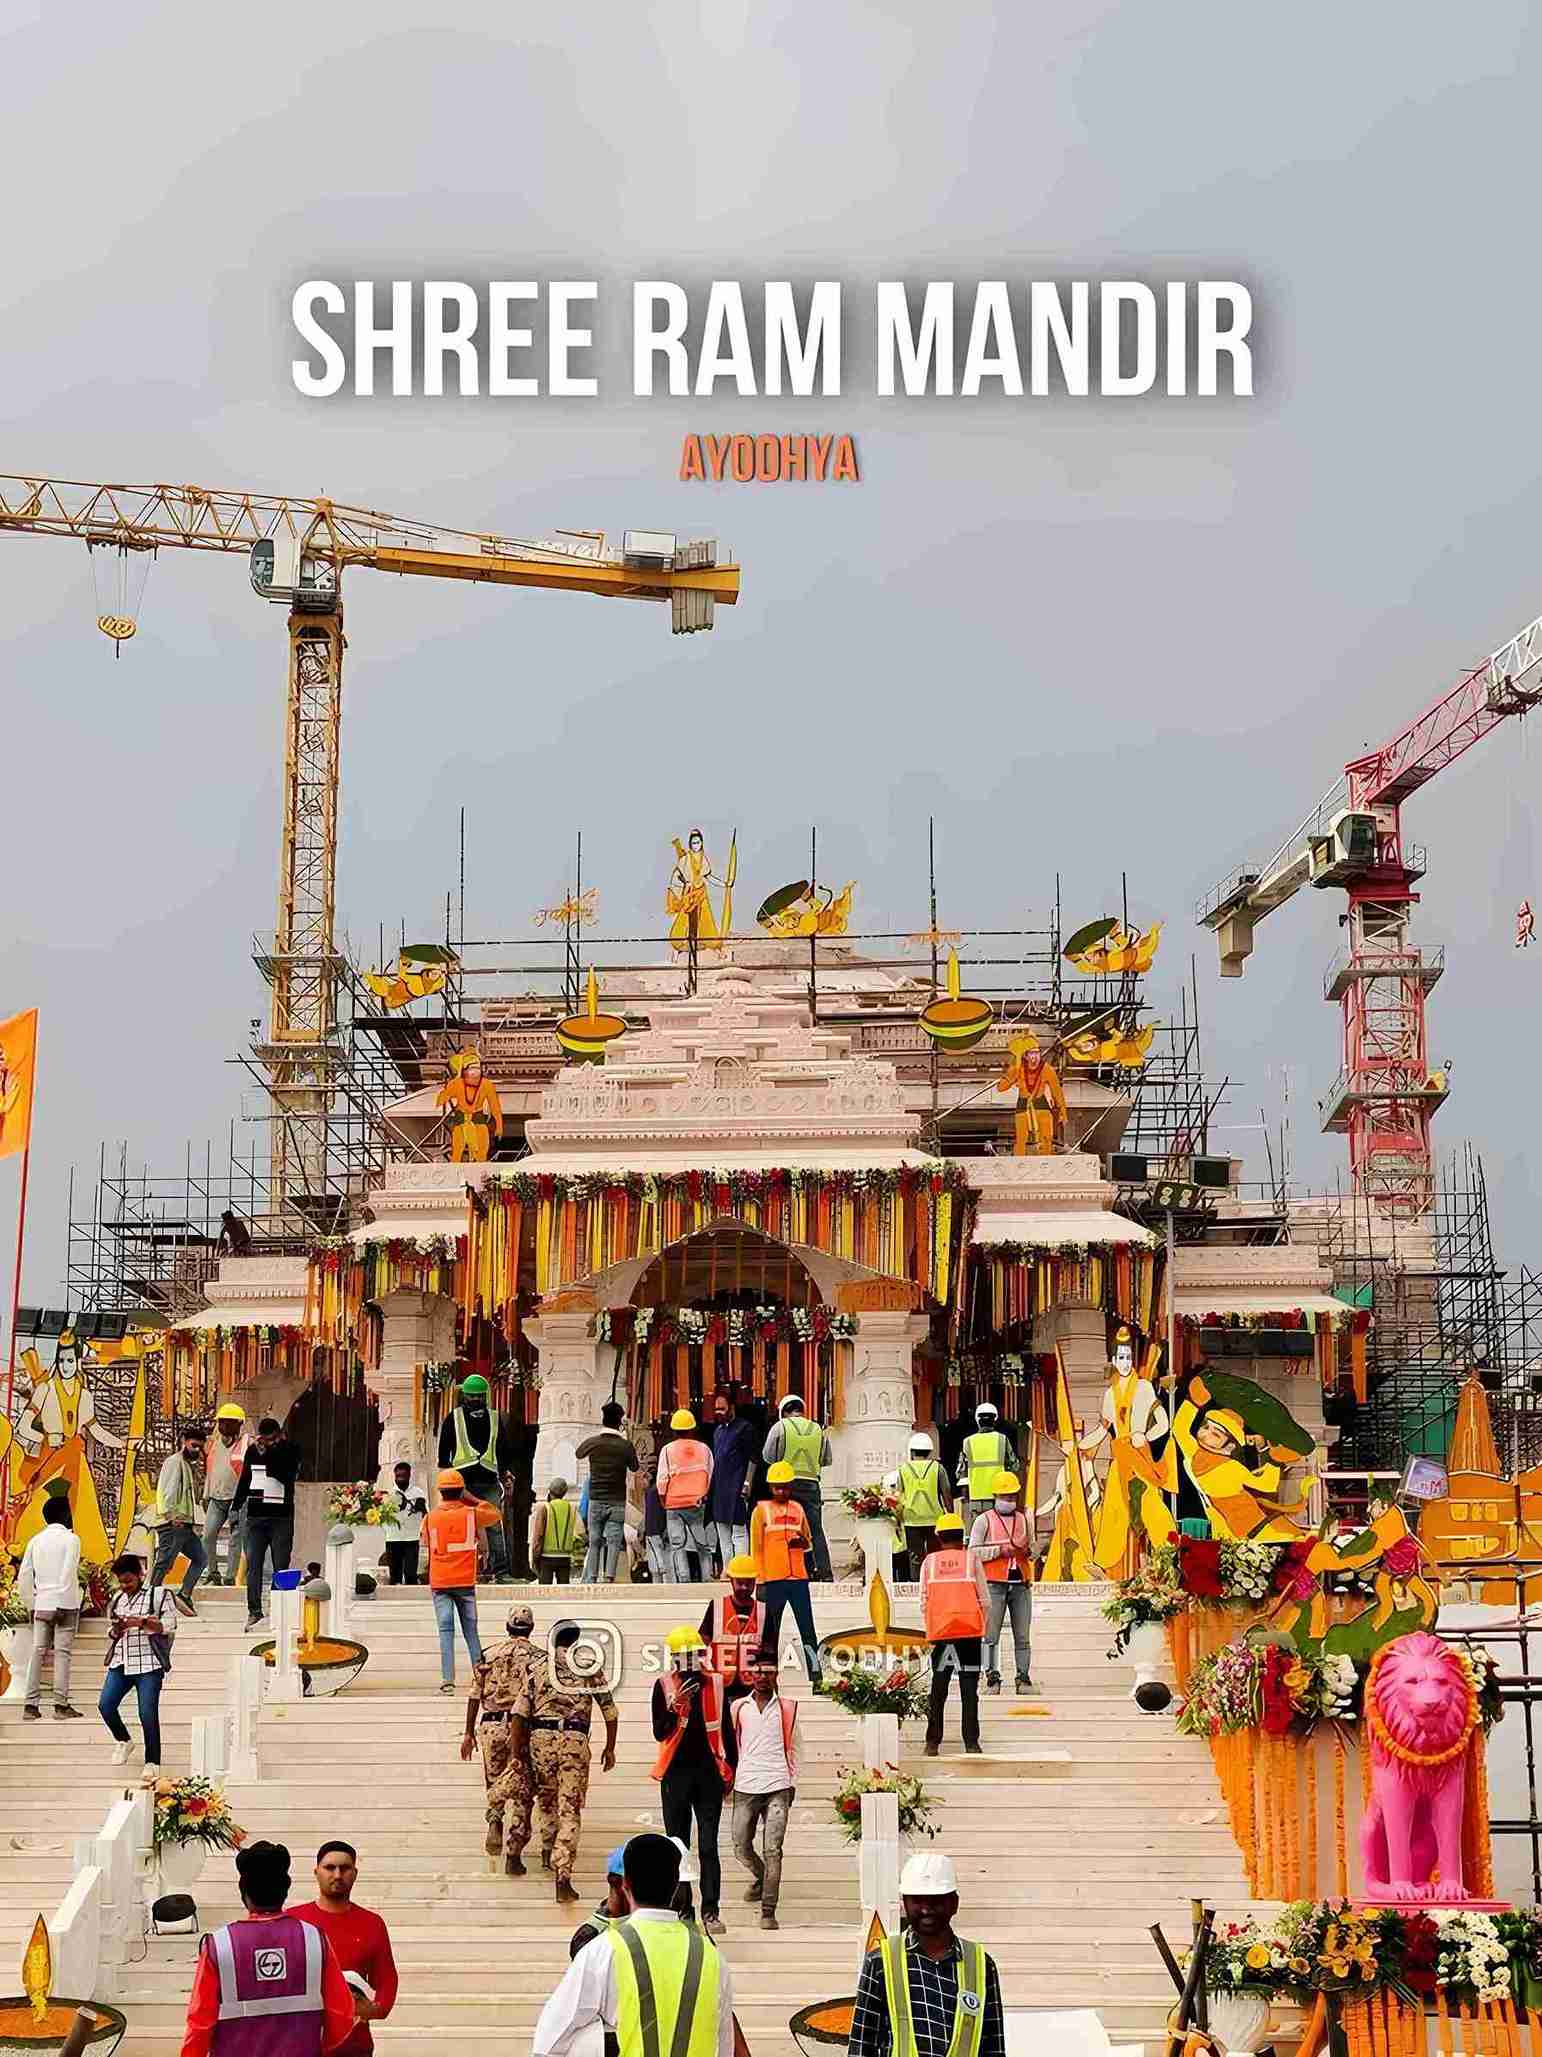 Ram Mandir Ayodhya Original Image HD